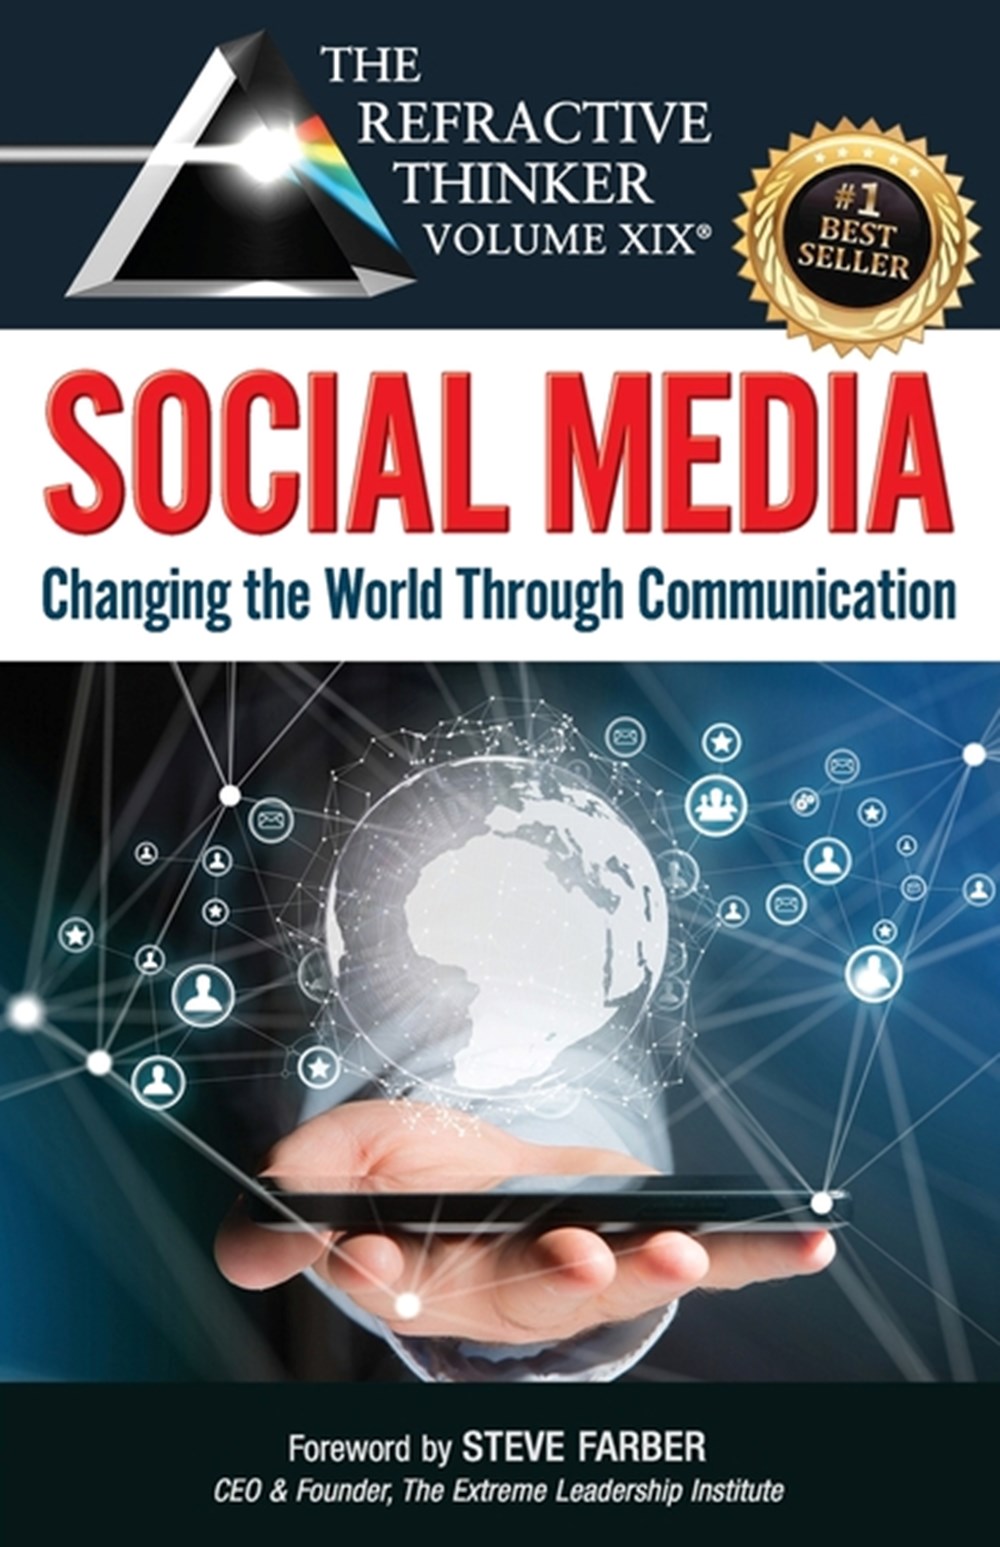 Refractive Thinker(R) Vol. XIX SOCIAL MEDIA: Changing the World Through Communication